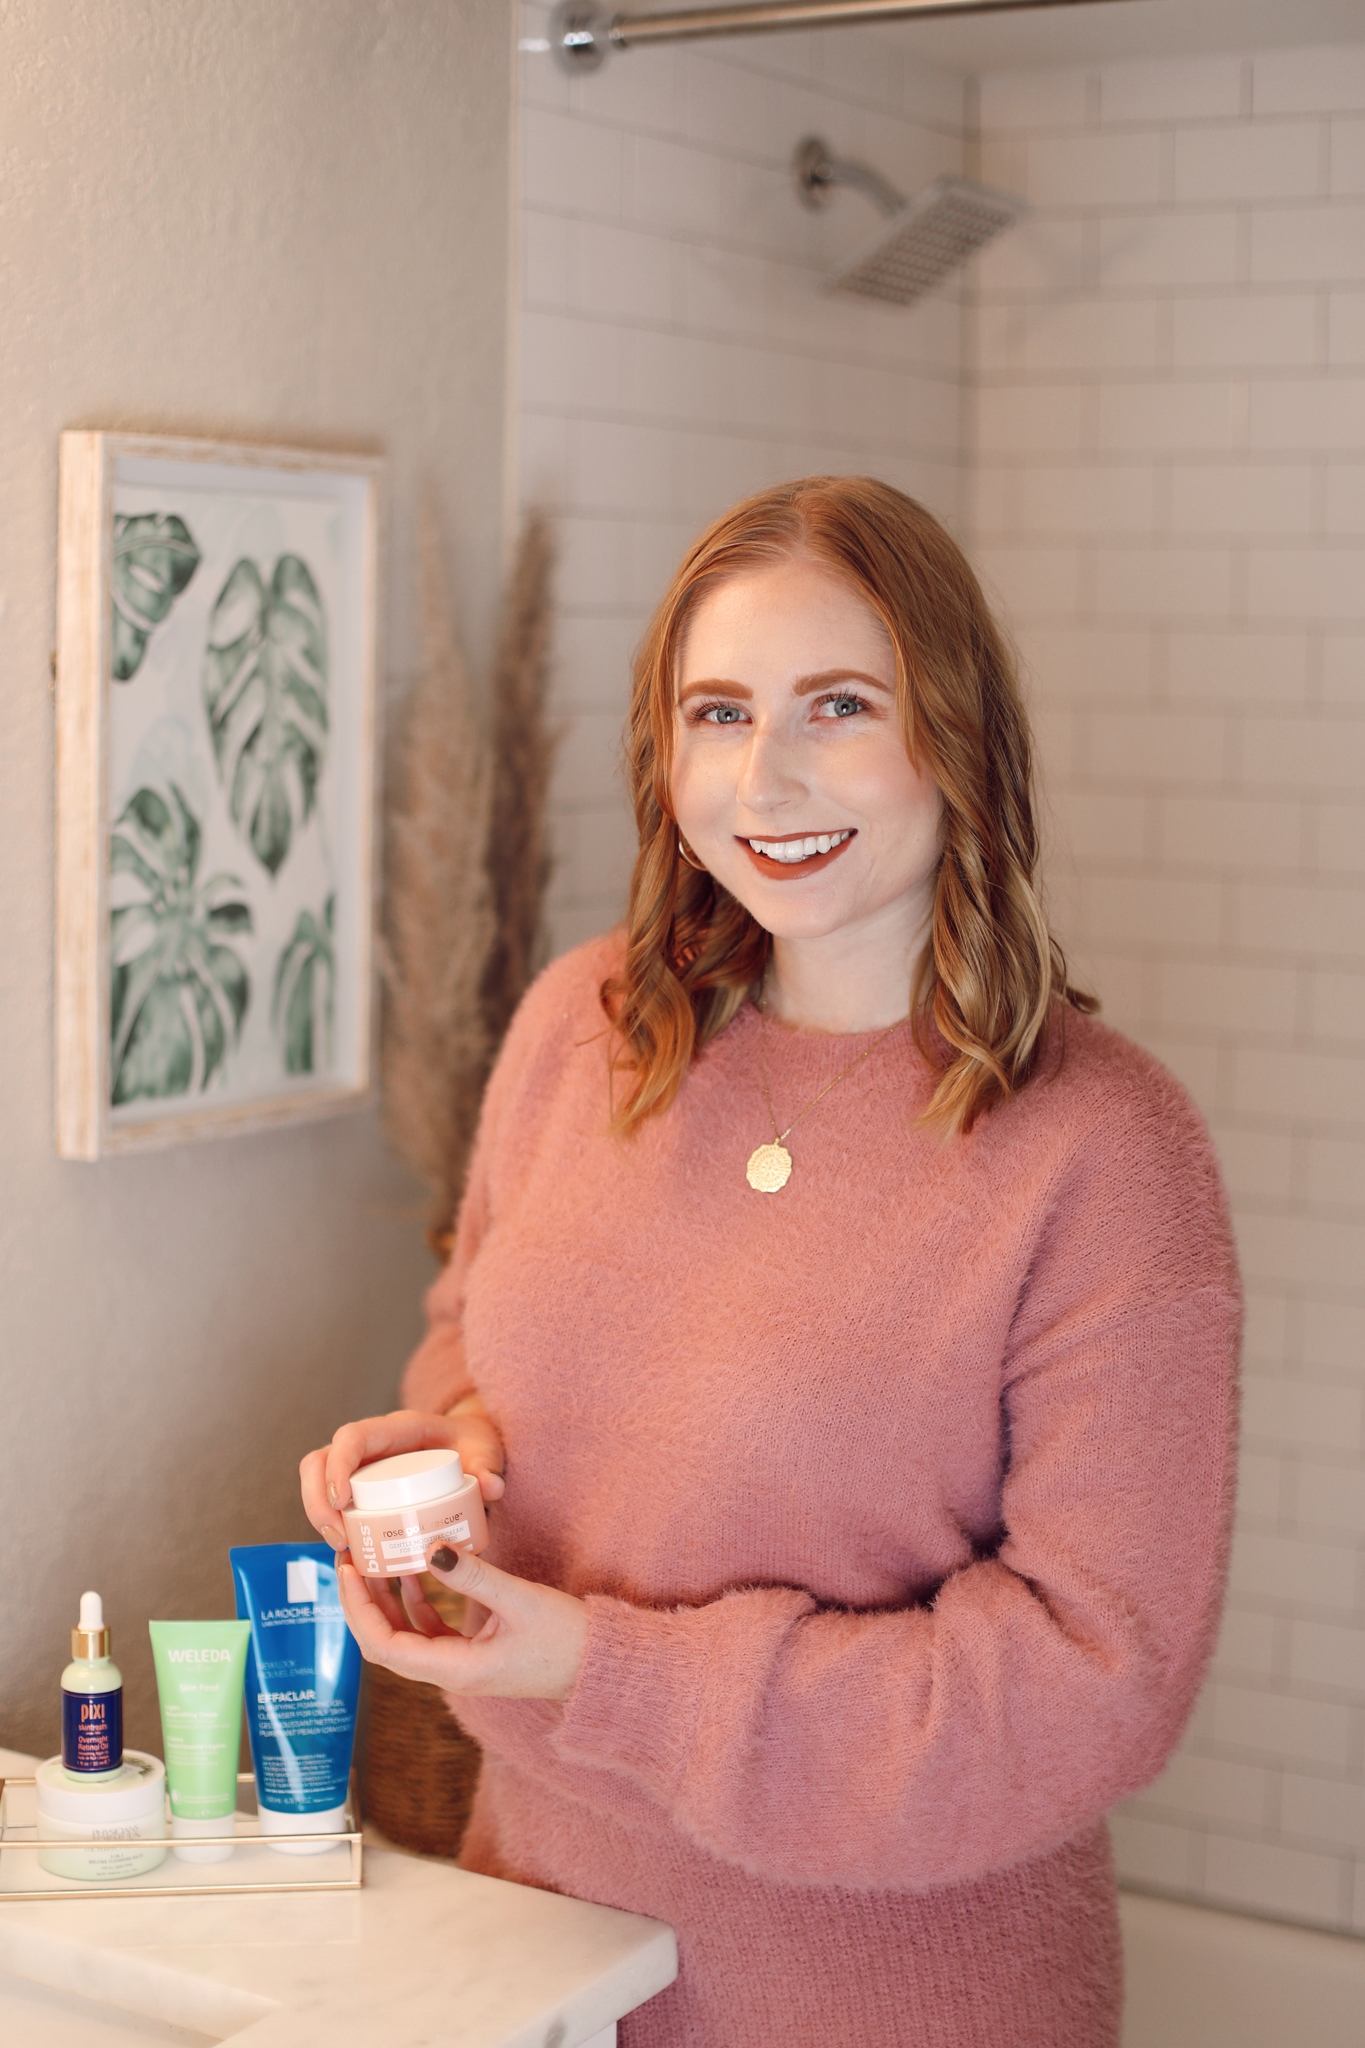 Best Drugstore Skincare 2020 | Bliss Rose Gold Rescue Gentle Moisture Cream For Sensitive Skin | Affordable by Amanda